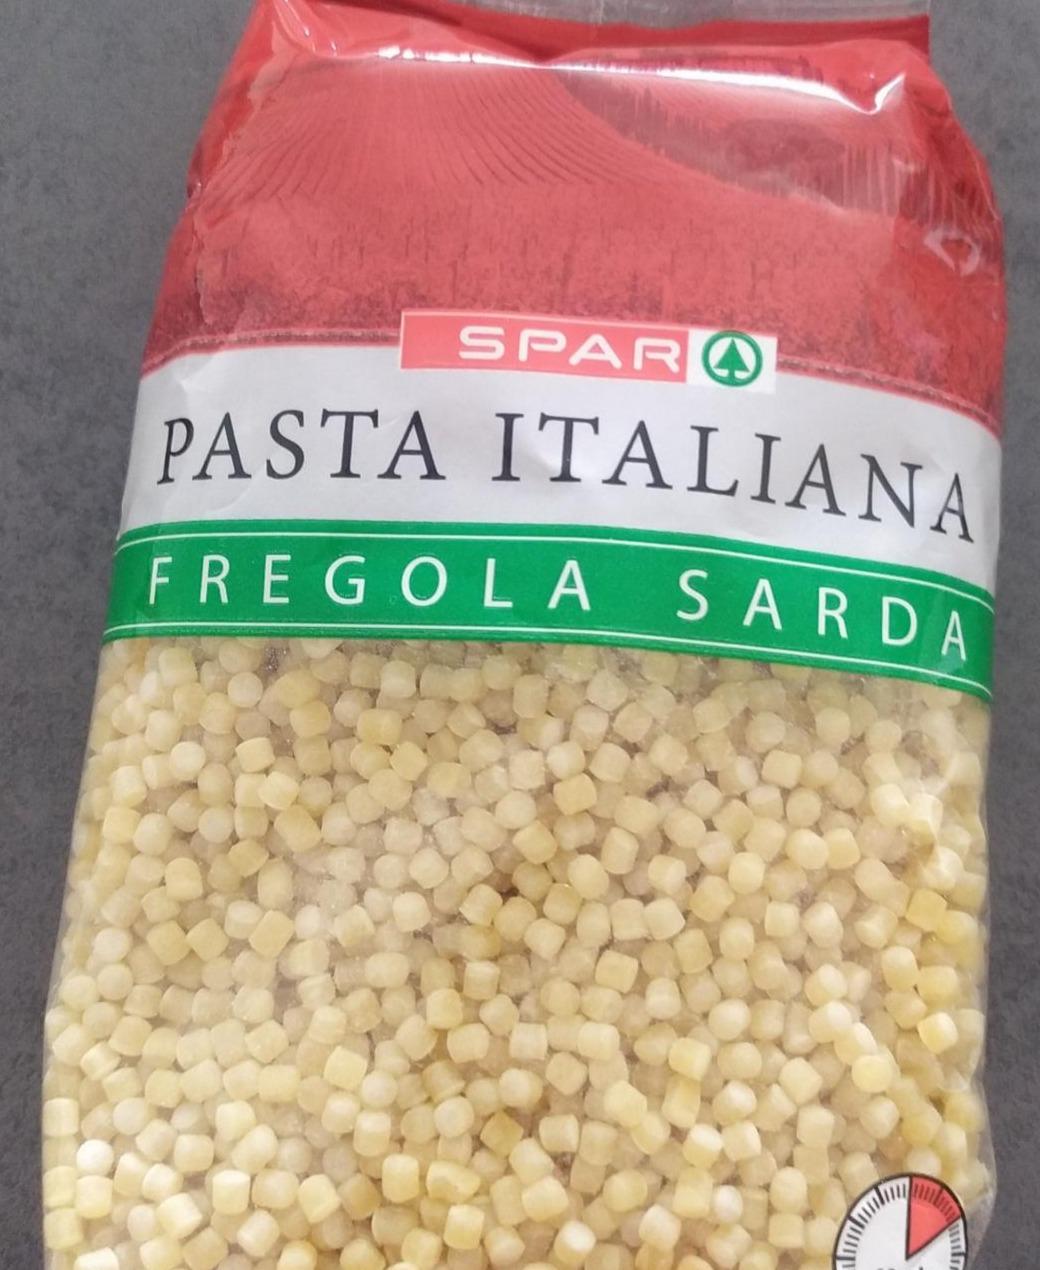 Fotografie - Pasta Italiana Fregola Sarda Spar